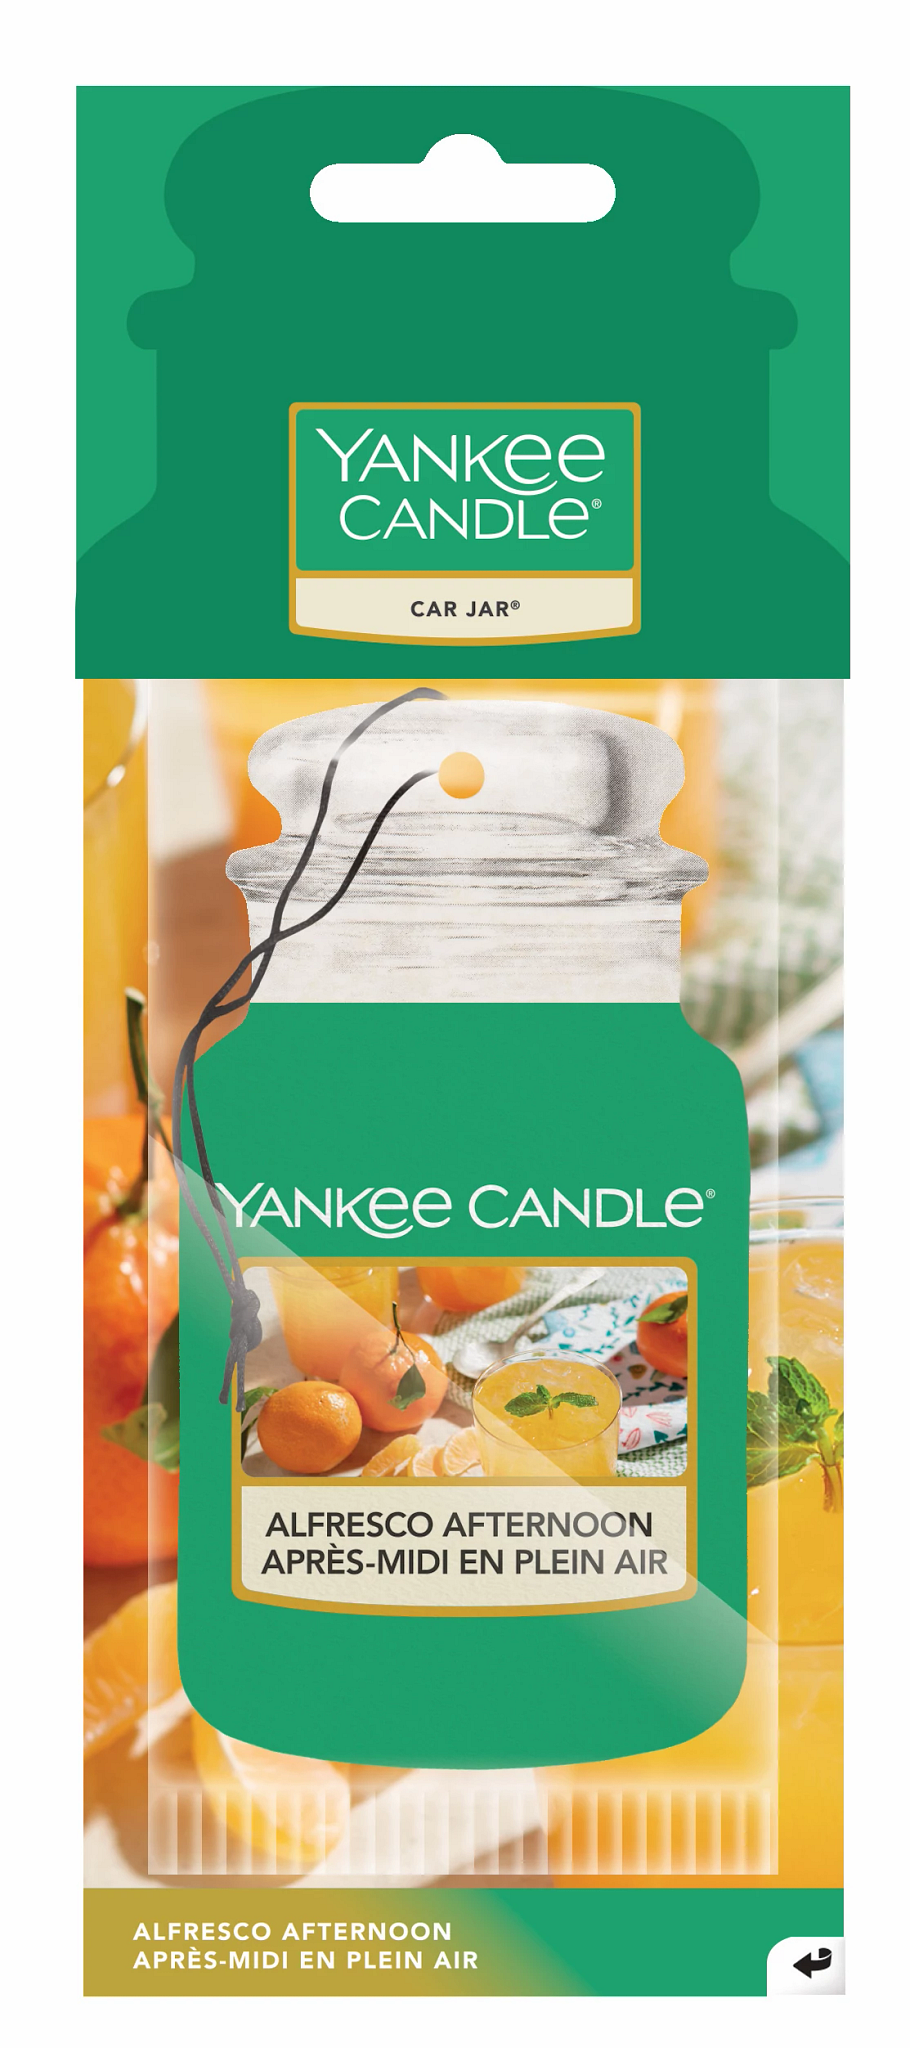 Yankee Candle - Car Jar Alfresco Afternoon